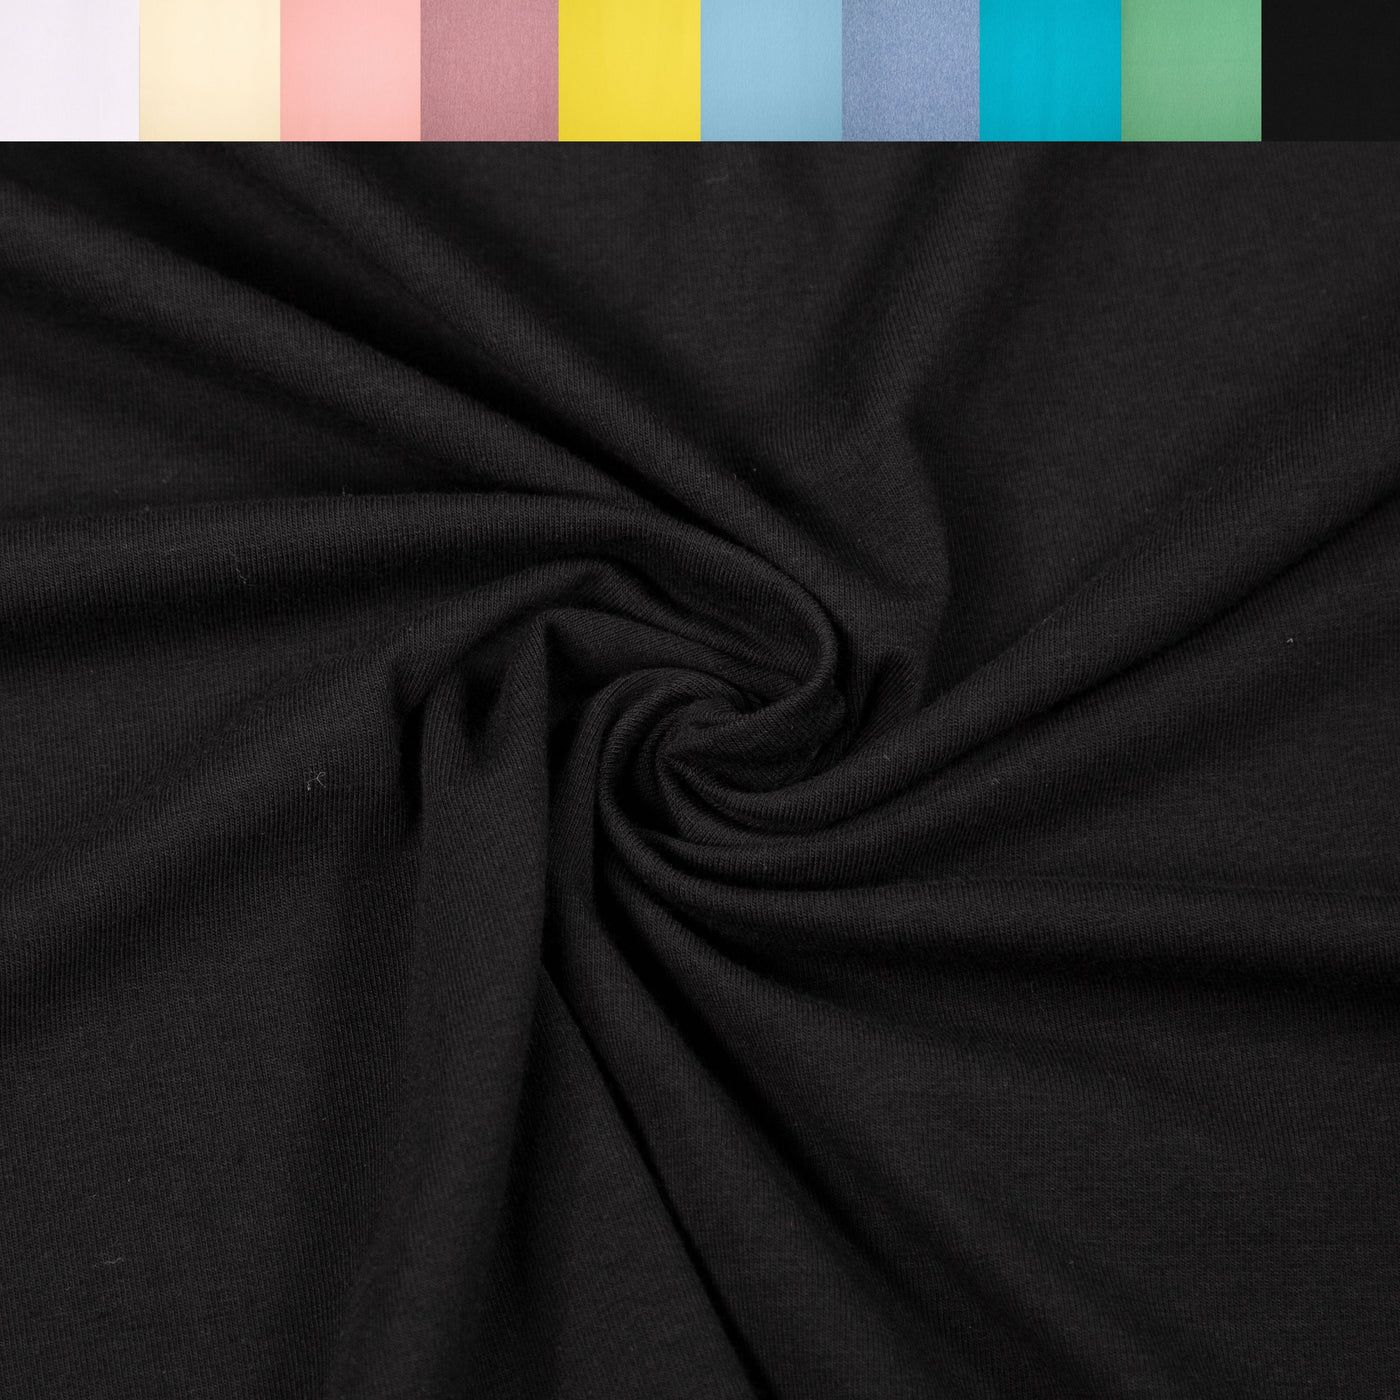 10oz Cotton Spandex Jersey Fabric | Black | Shop FabricLA.com